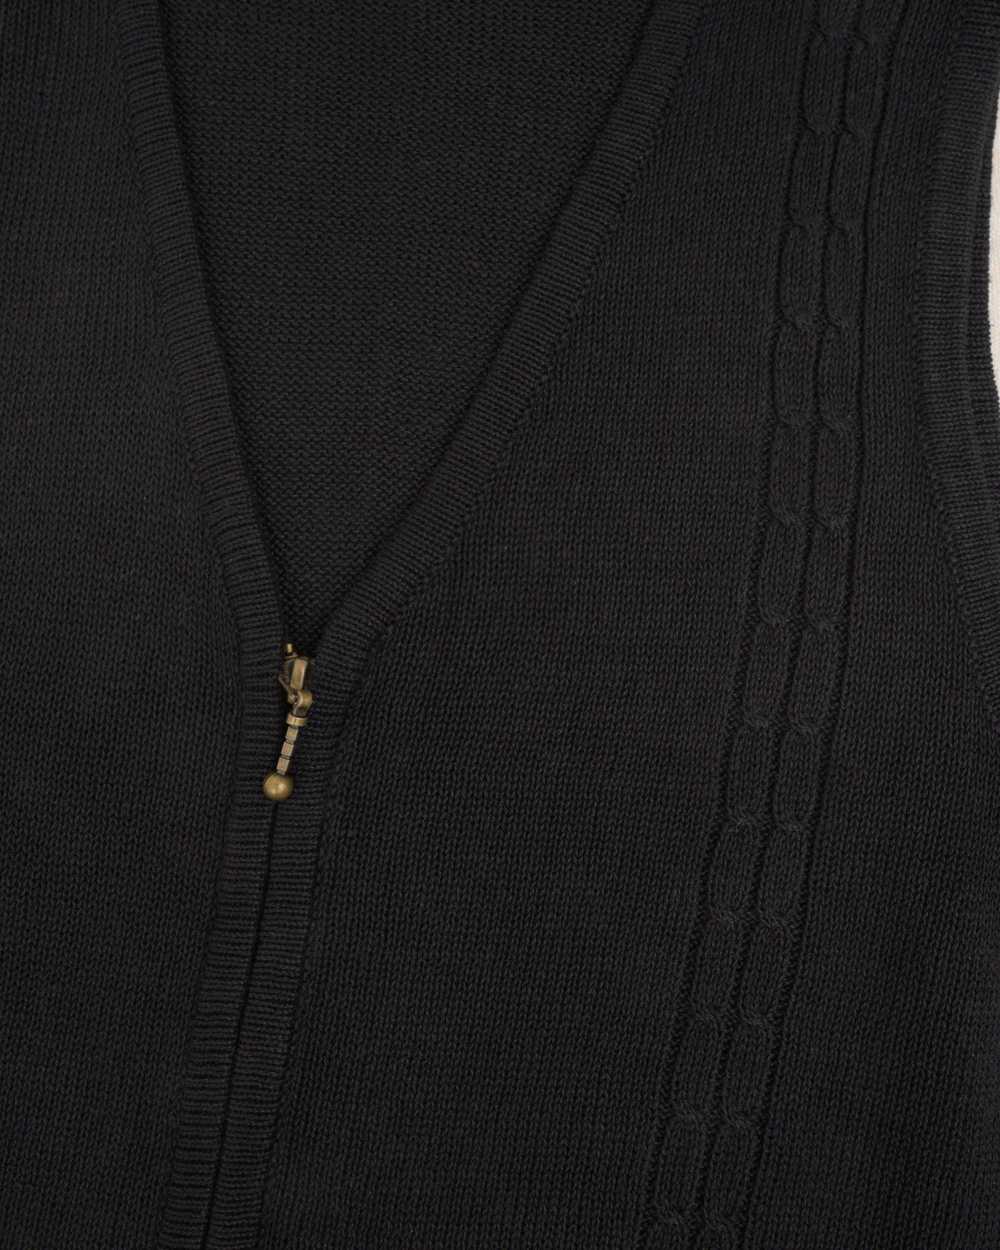 Vintage Black Knit Vest (S/M) - image 7